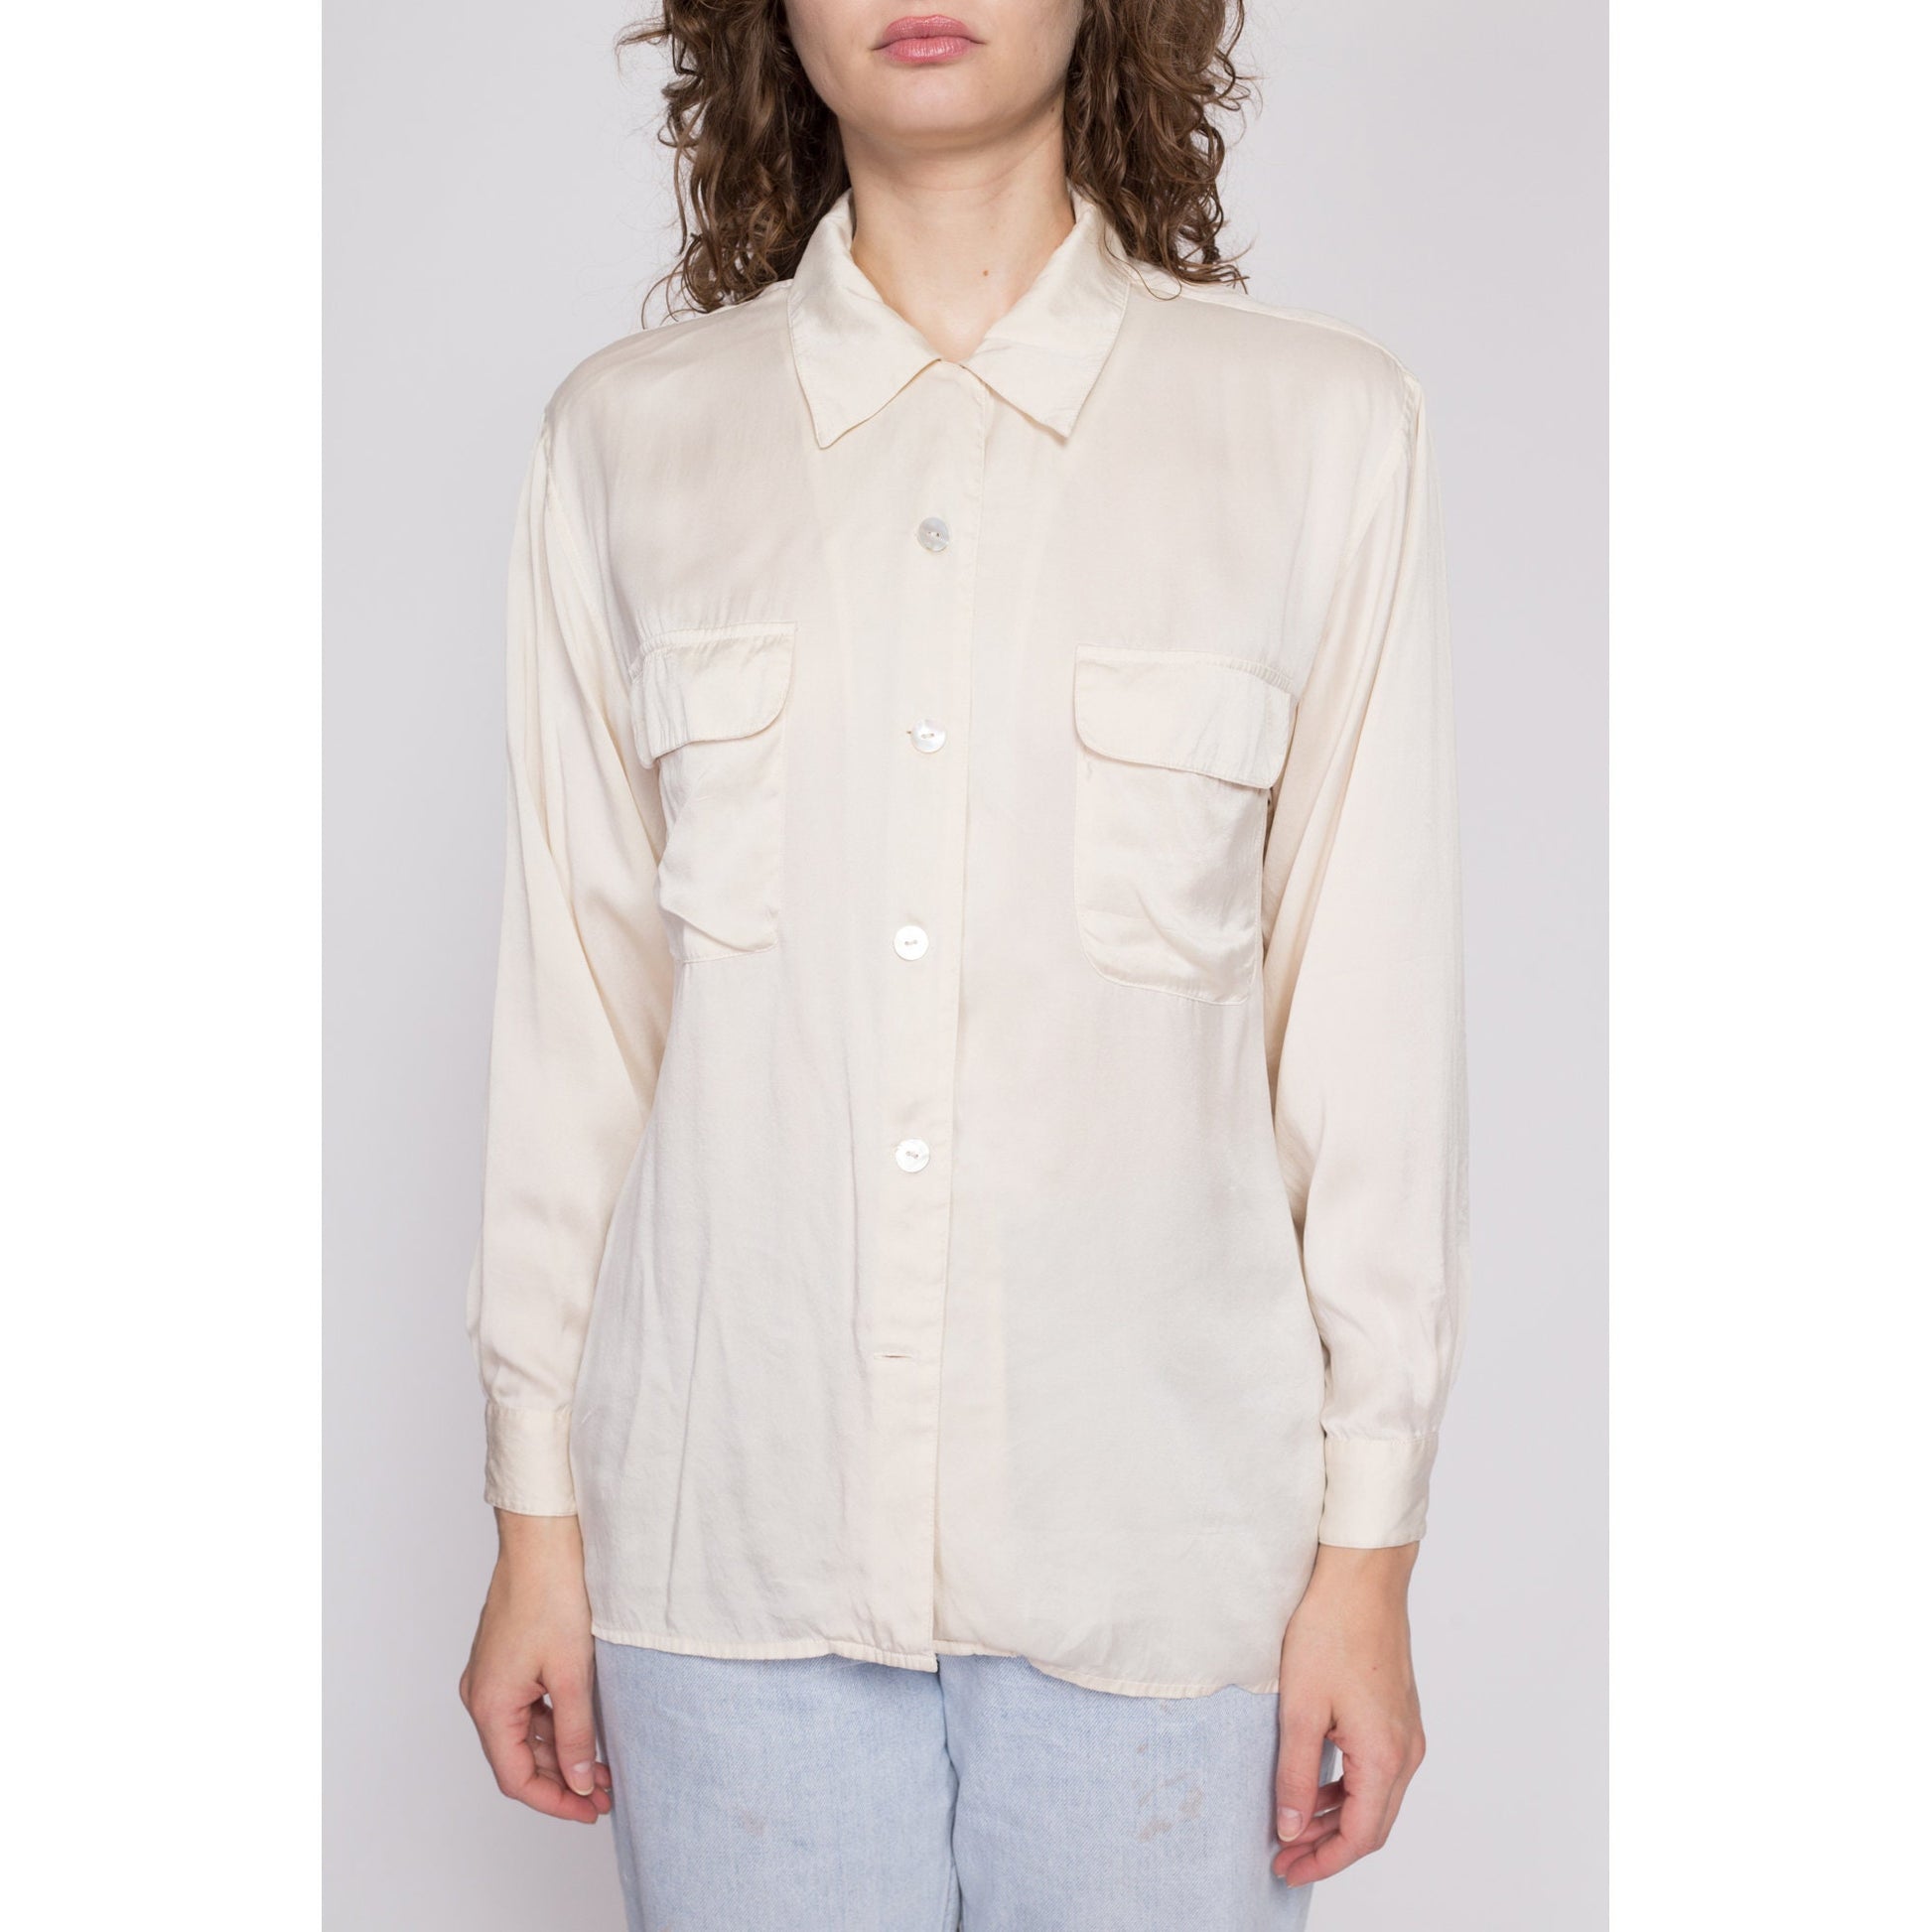 M| 90s Ivory Silk Blouse - Medium | Vintage Minimalist Long Sleeve Button Up Collared Shirt